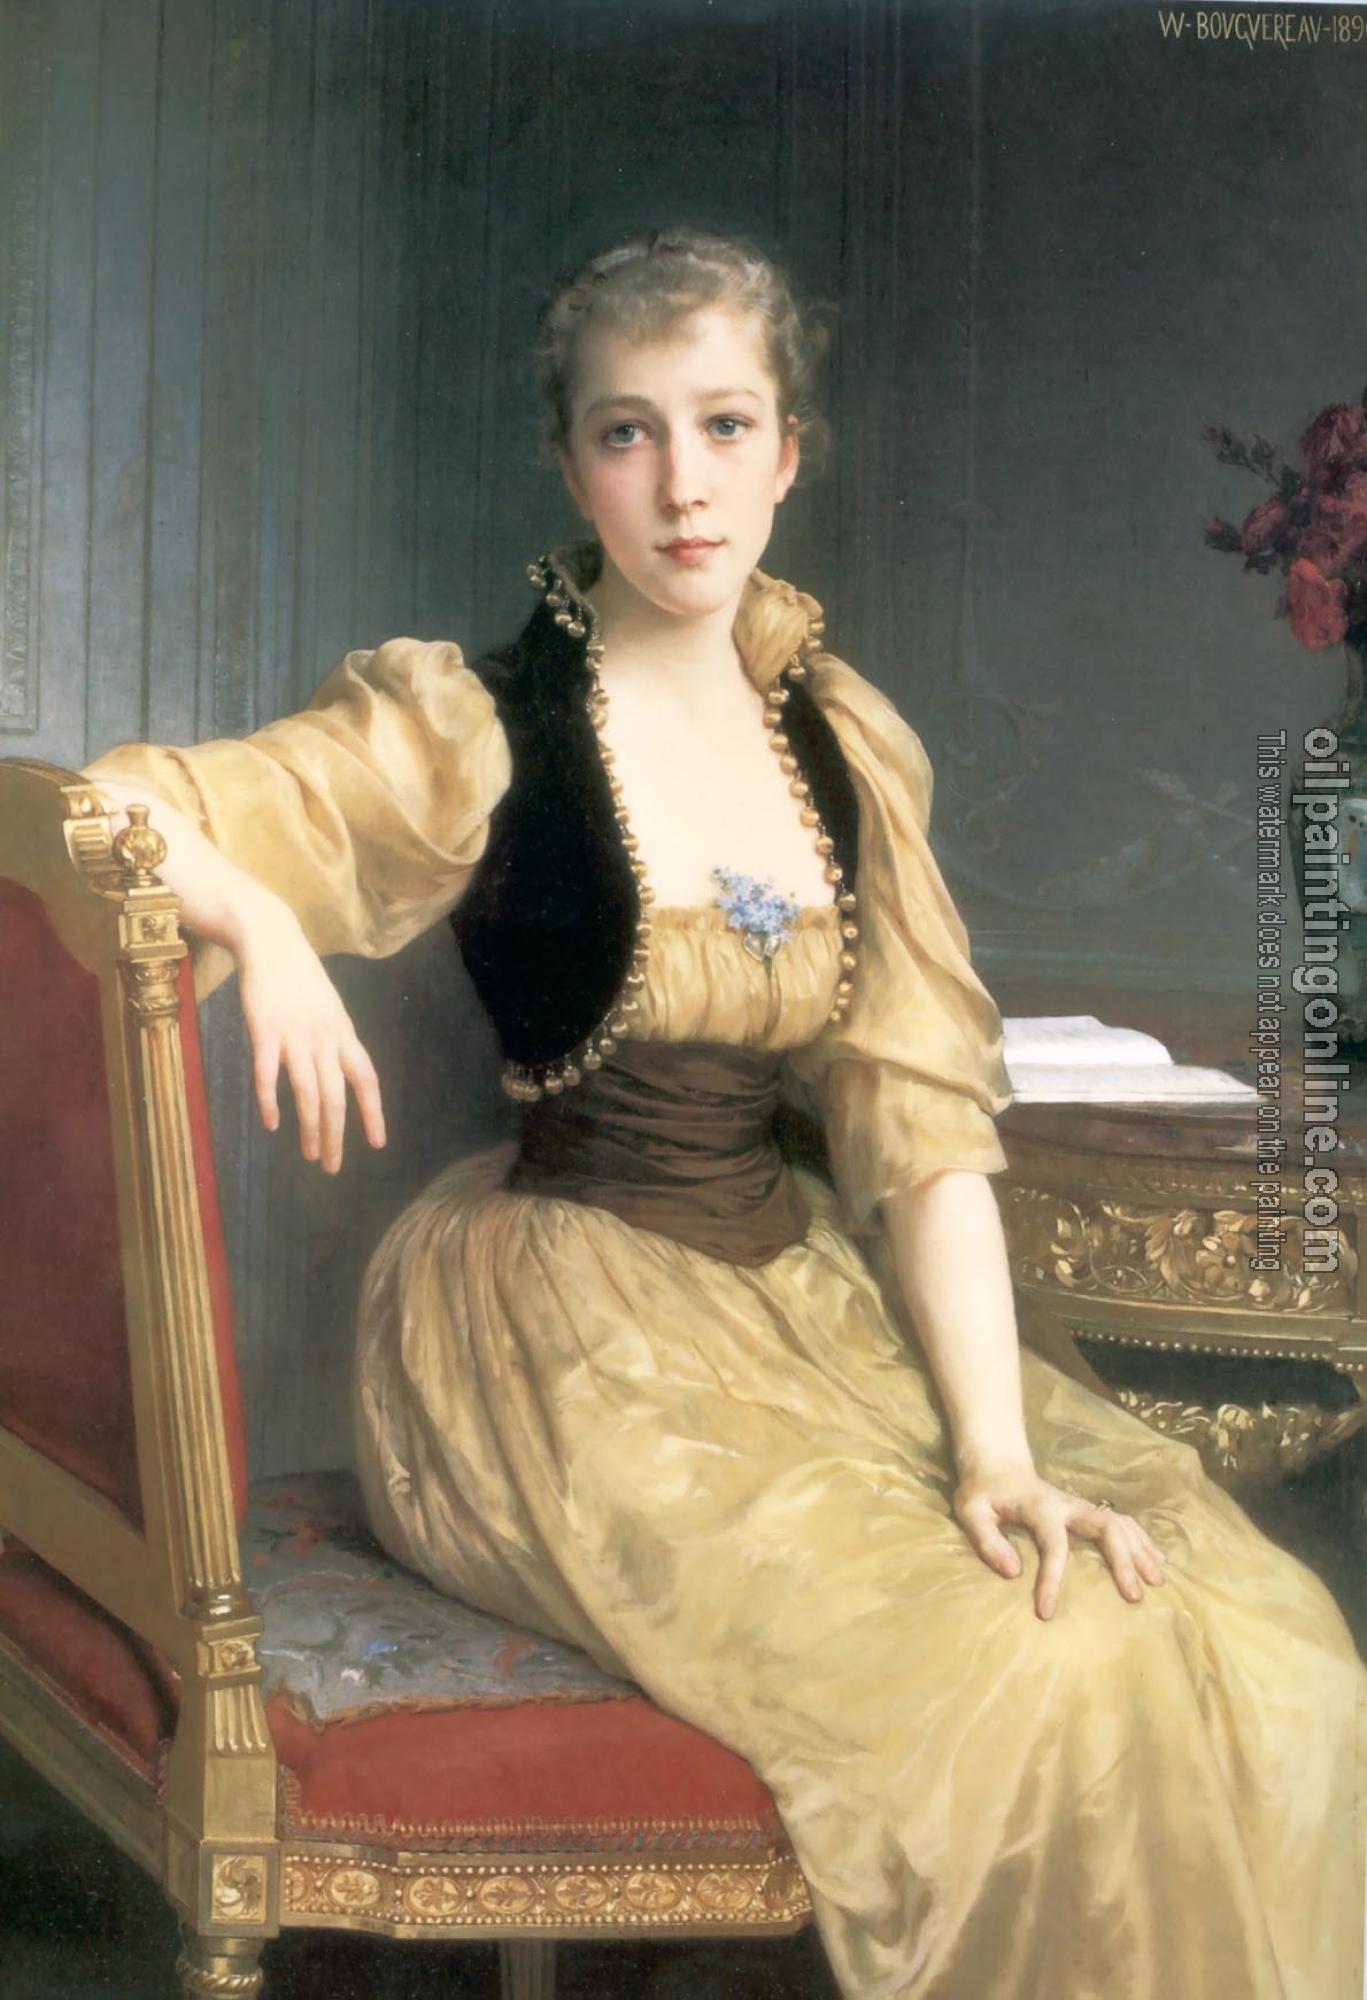 Bouguereau, William-Adolphe - Lady Maxwell